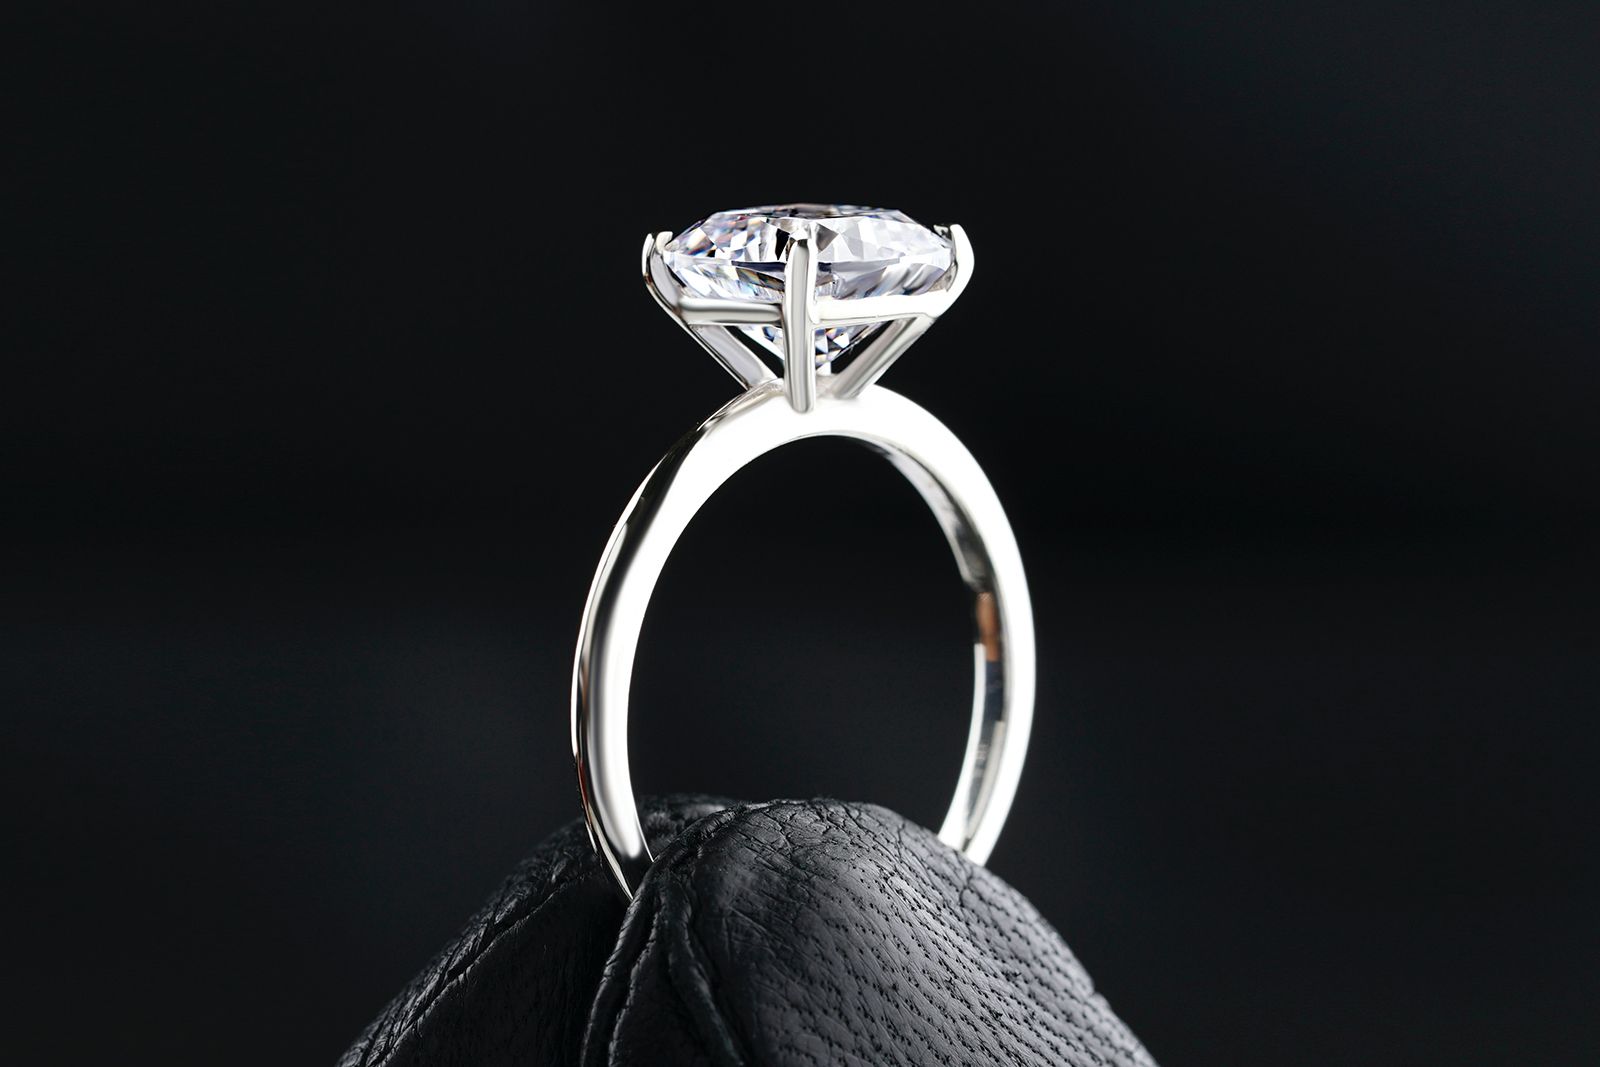 John Pye platinum and diamond Pex ring